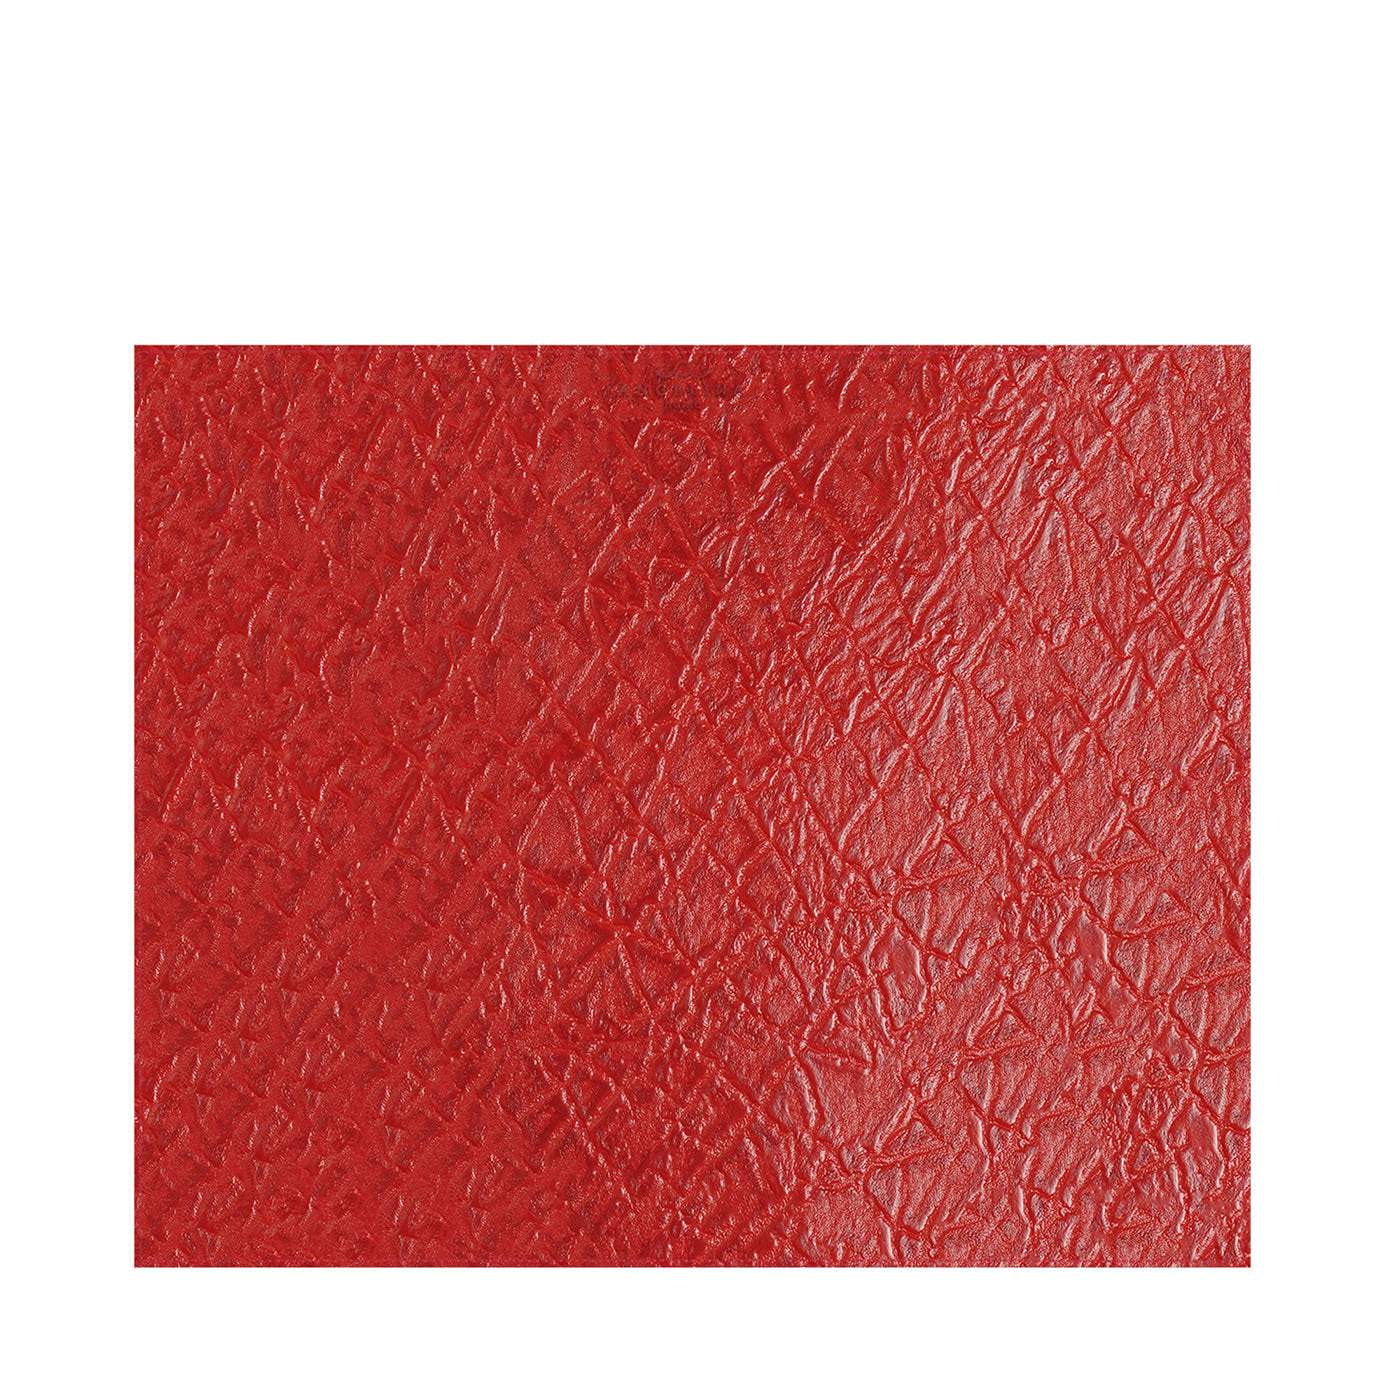 Tanzania Medium Set of 2 Rectangular Red Leather Placemats - Alternative view 1